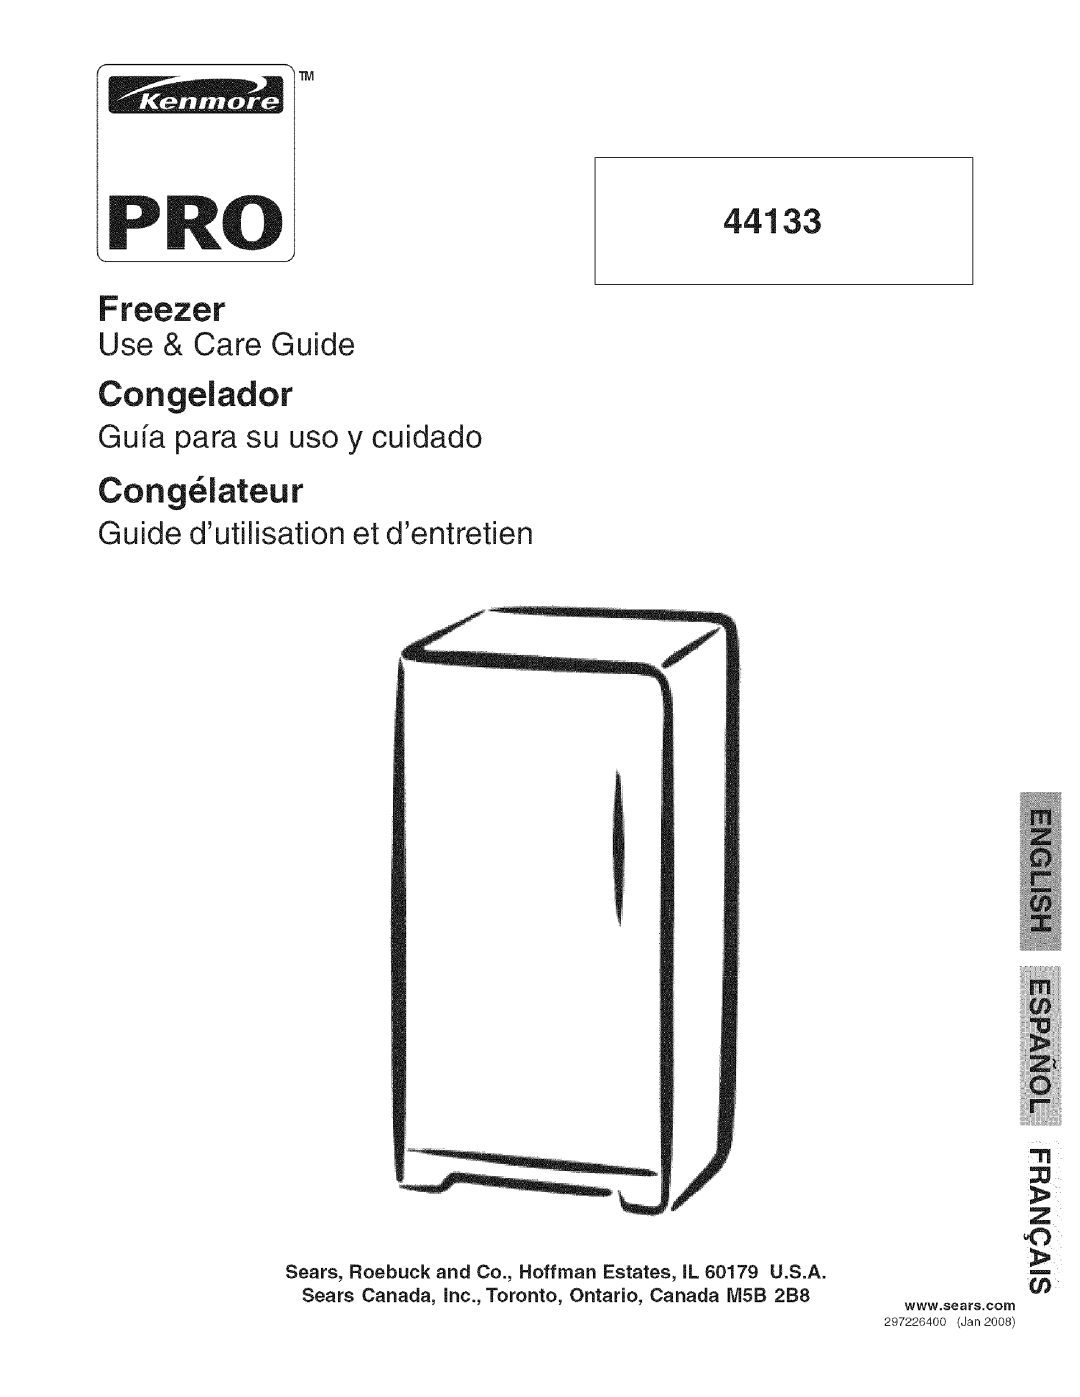 Kenmore 25344133802, 25344133800 manual Congelador, Cong lateur Guide dutilisationet dentretien, Freezer Use & Care Guide 